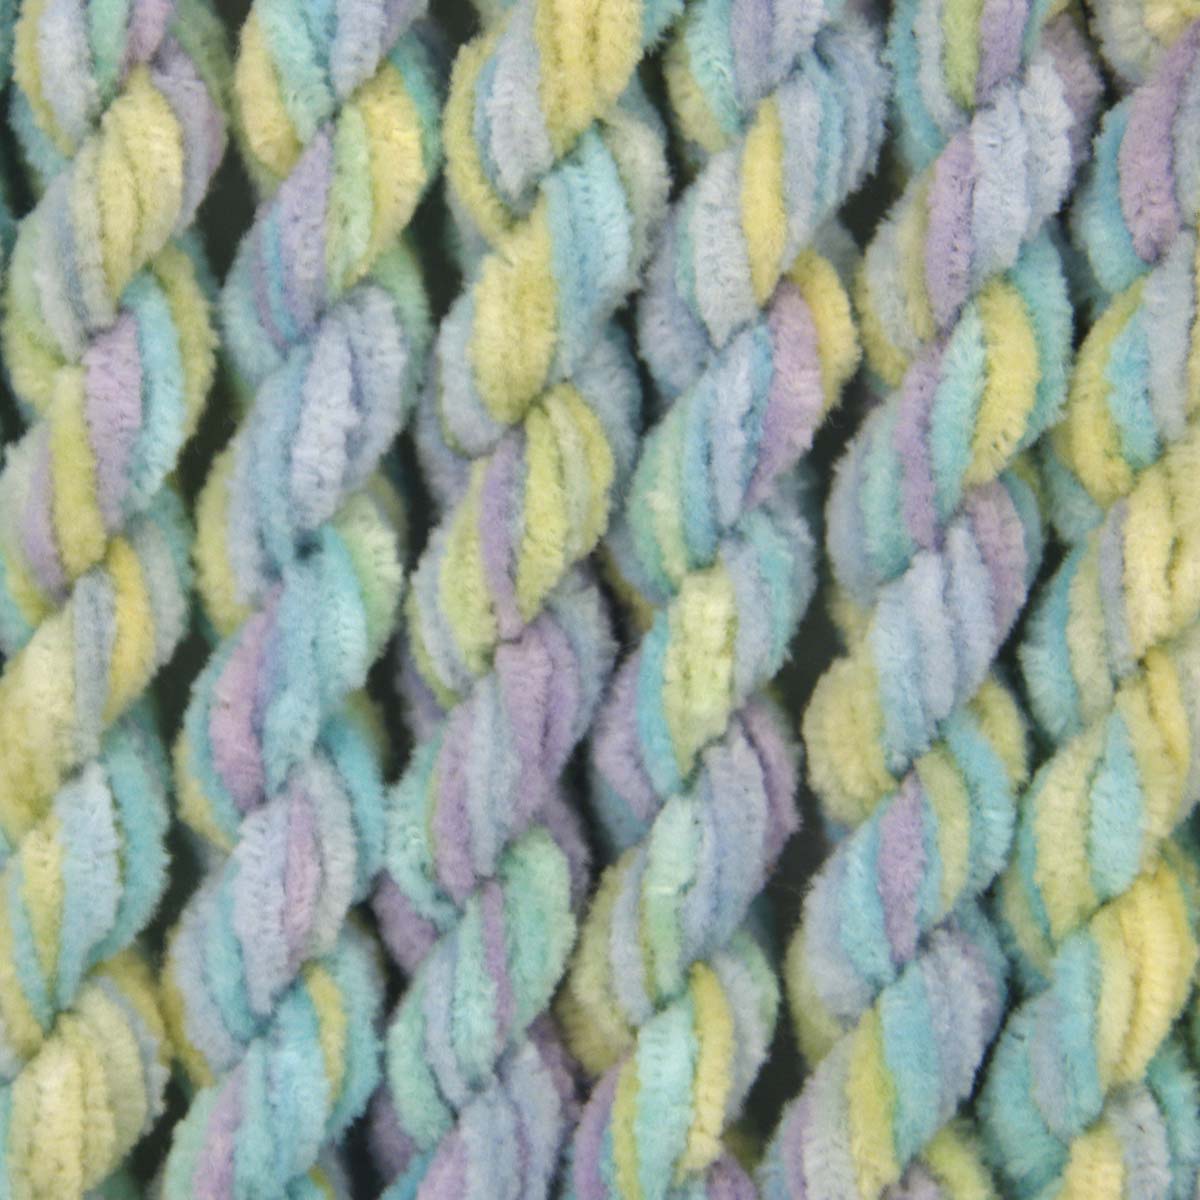 www.colourstreams.com.au Colour Streams Hand Dyed Chenille Threads Slow Stitch Embroidery Textile Arts Fibre DL 16 Yellows Purples BLues